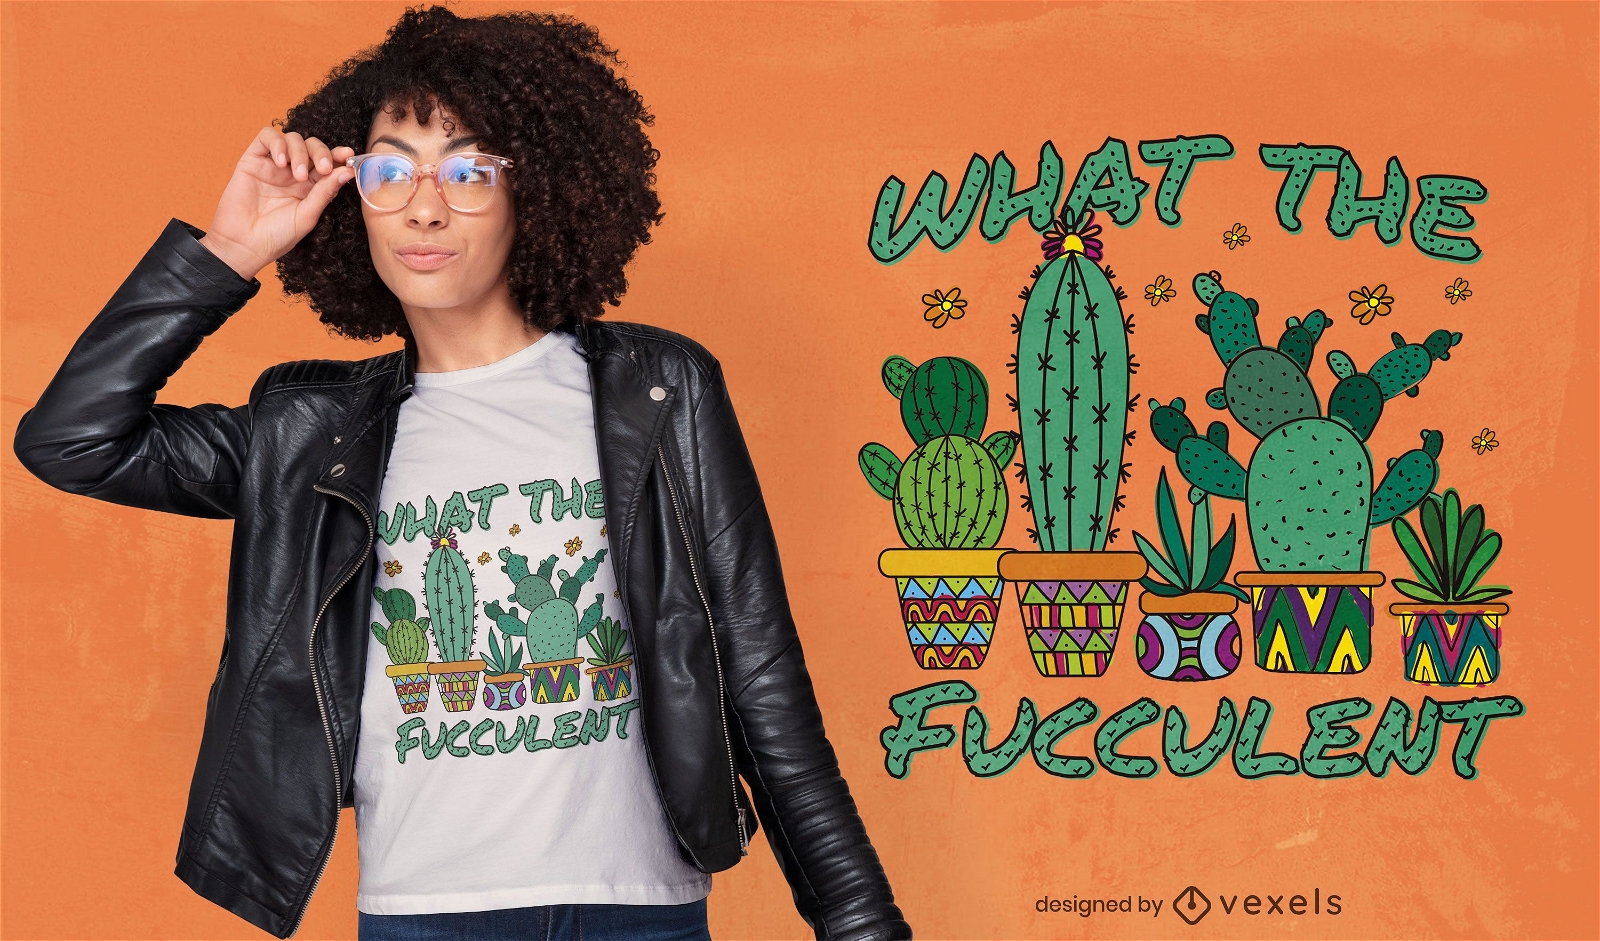 Dise?o de camiseta de cita suculenta de cactus.